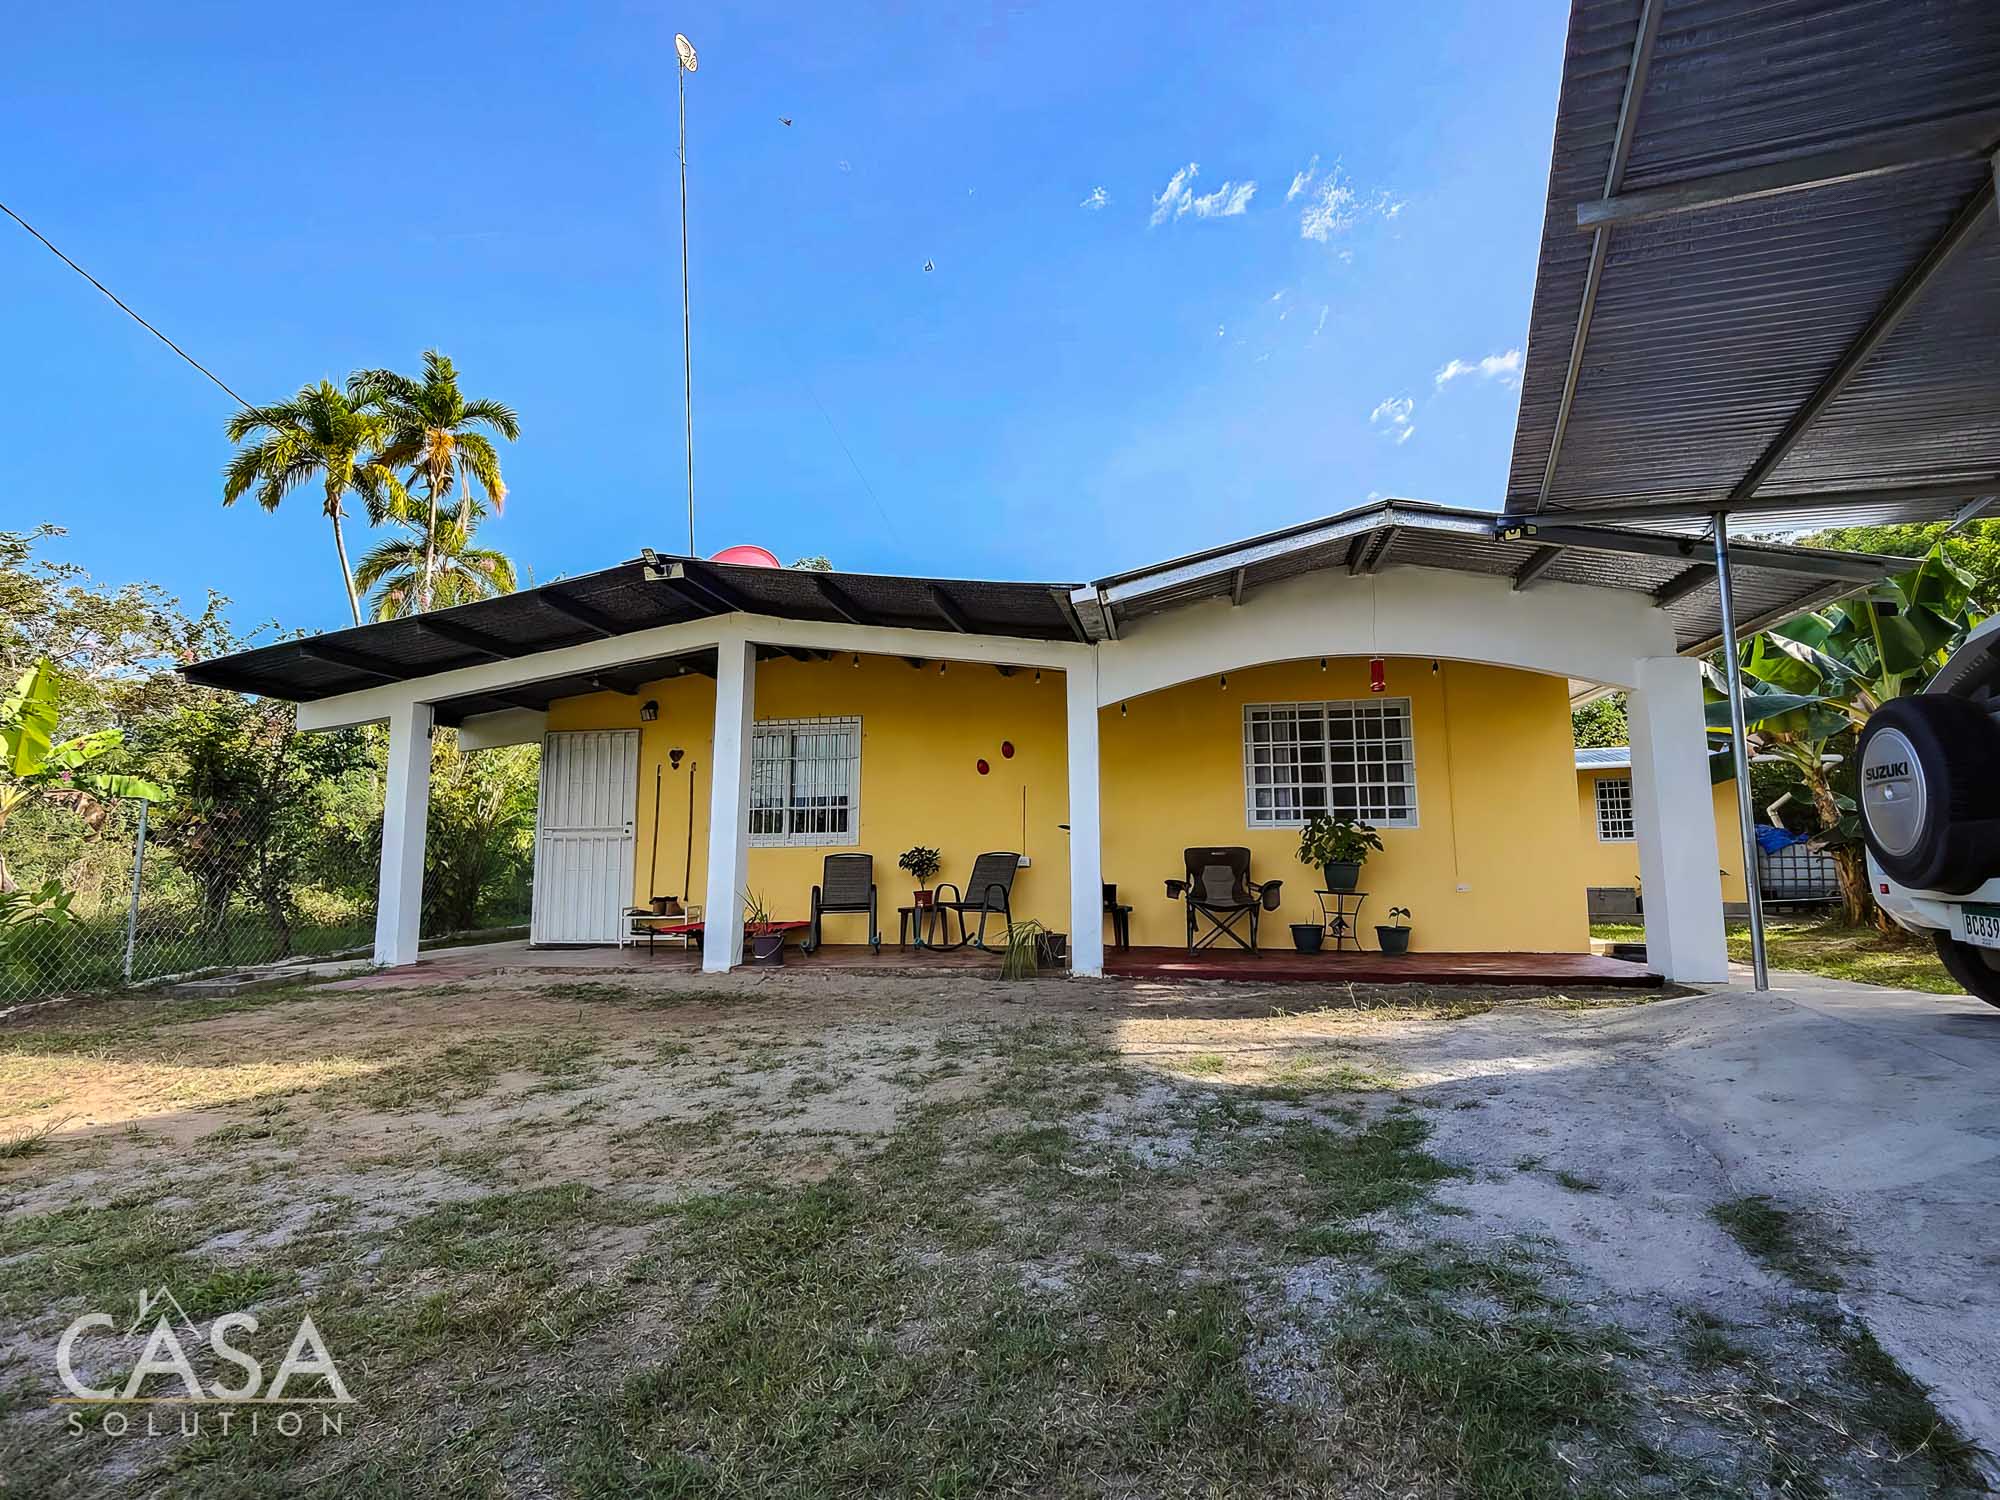 2-Bedroom House for Sale or Rent in El Palmar, Puerto Armuelles, Chiriqui. 